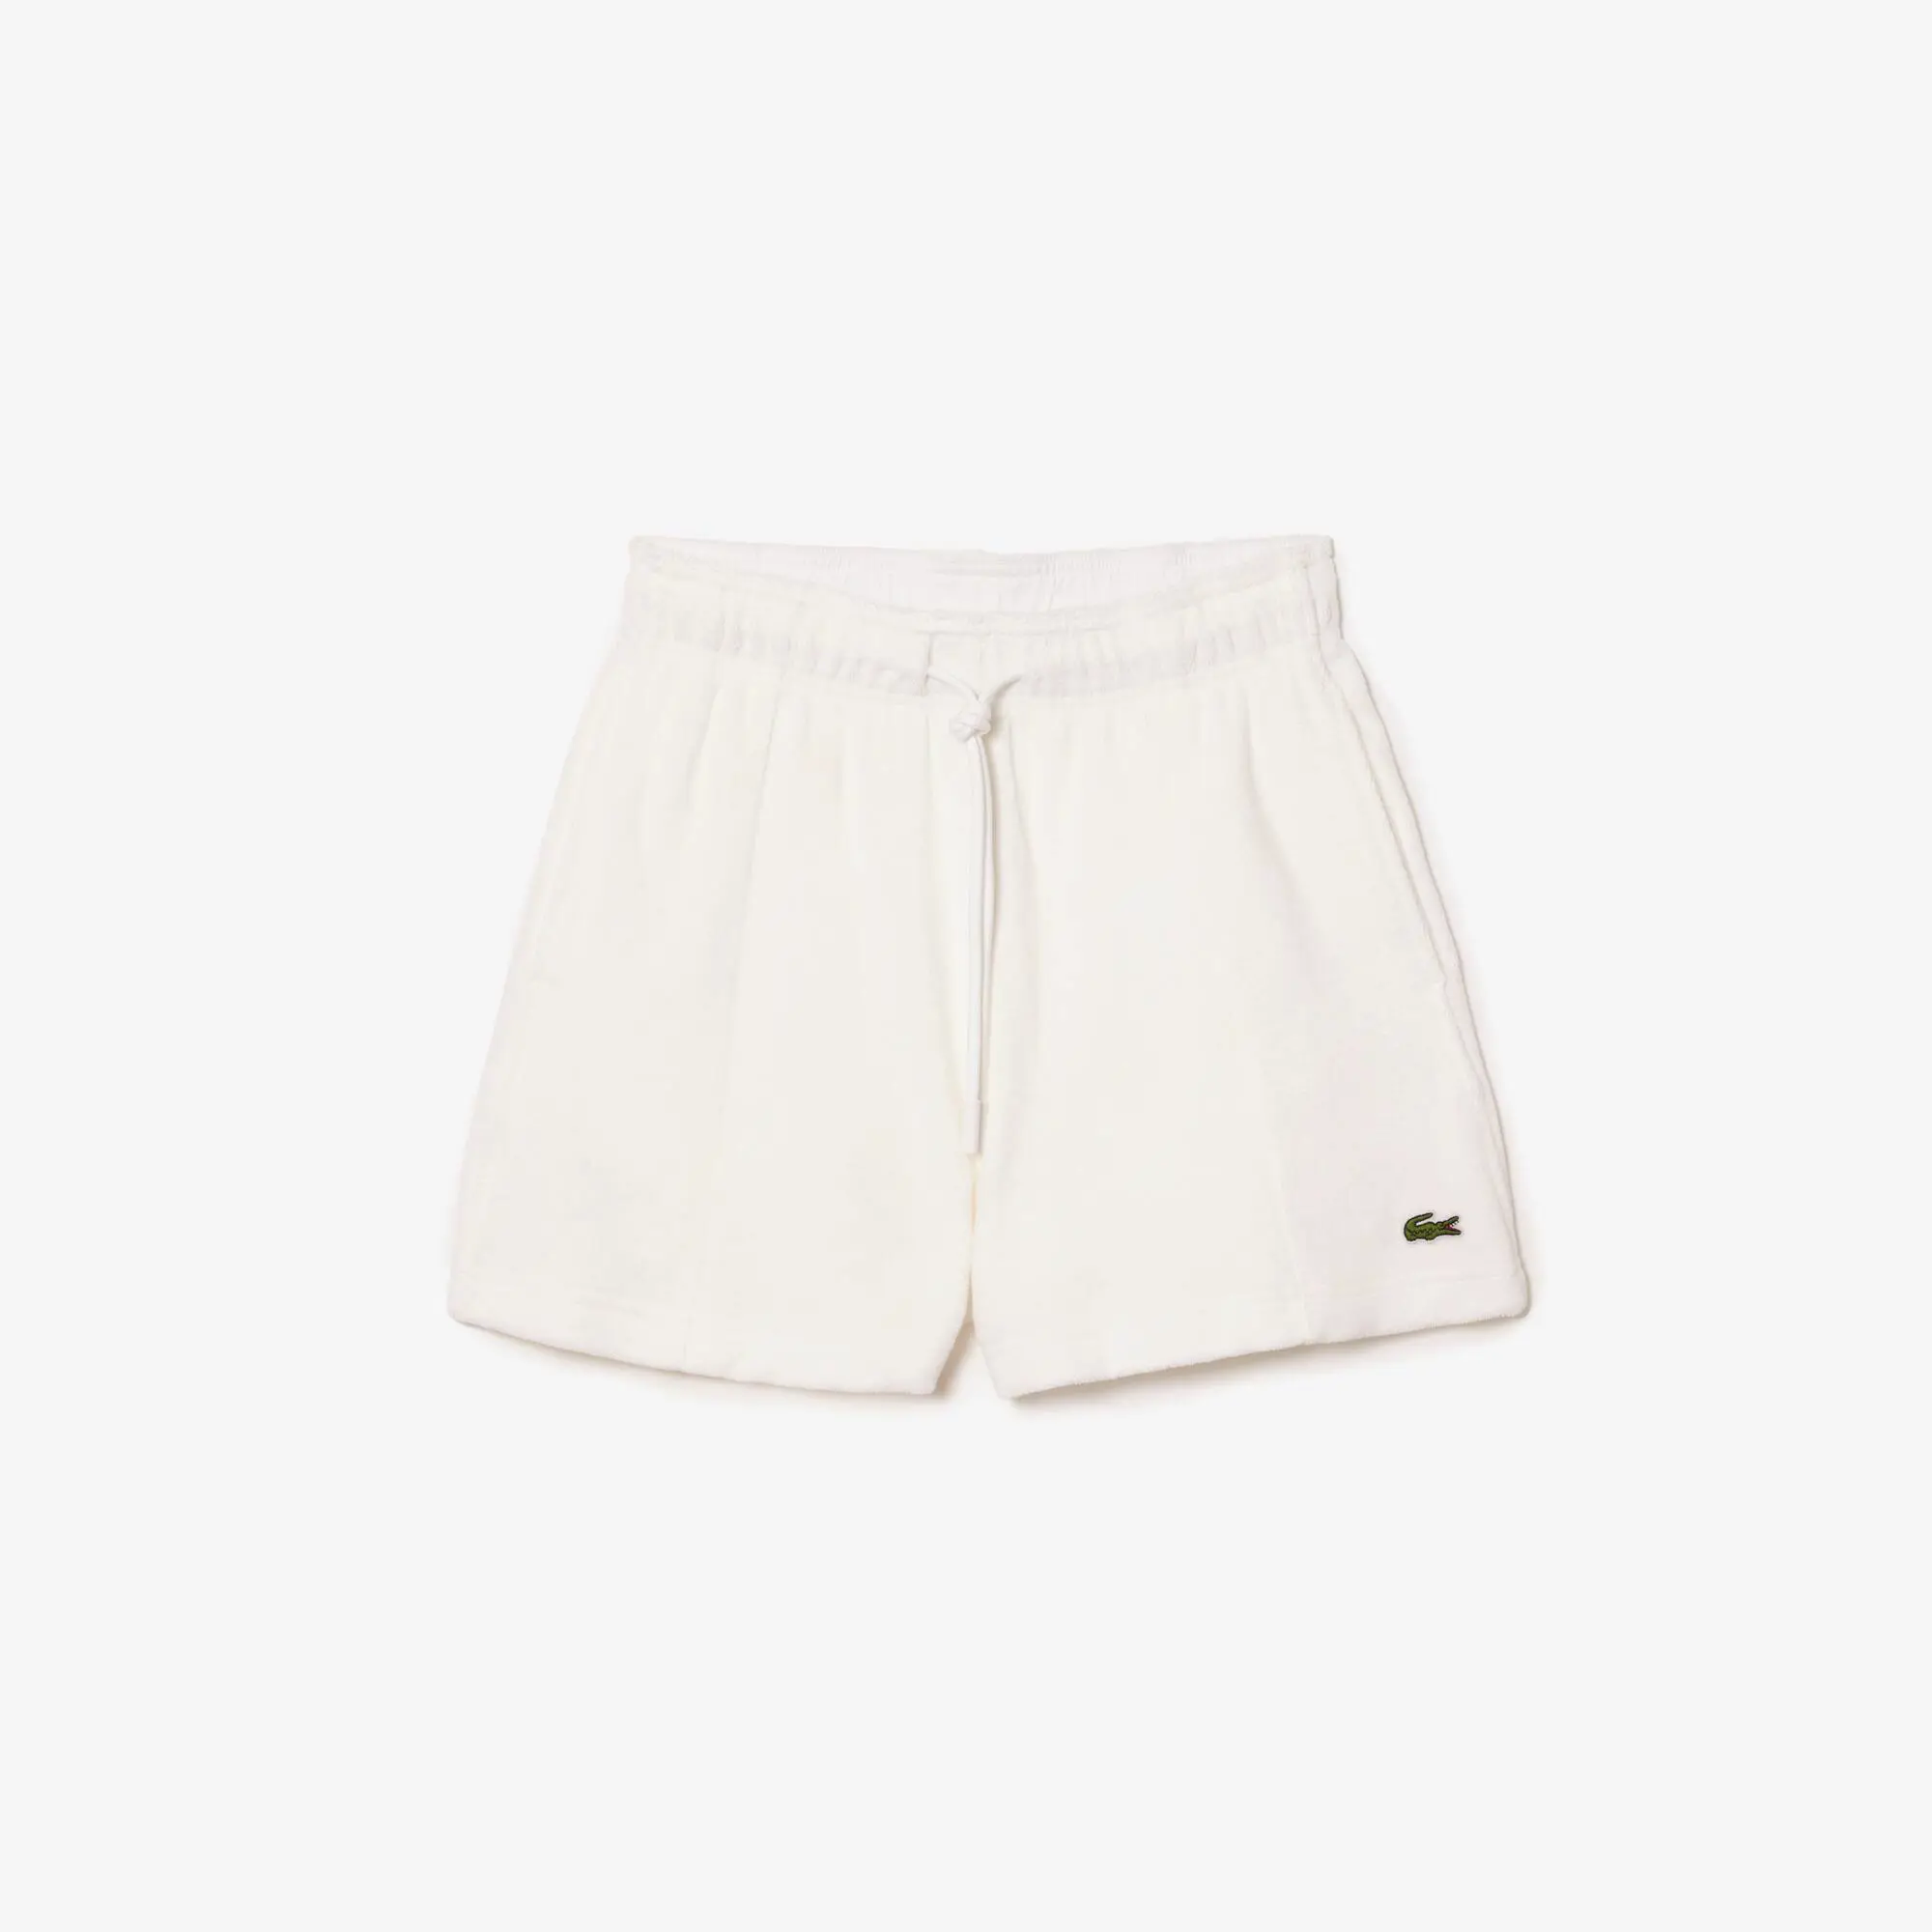 Lacoste Women’s Lacoste Organic Cotton Terry Shorts. 2